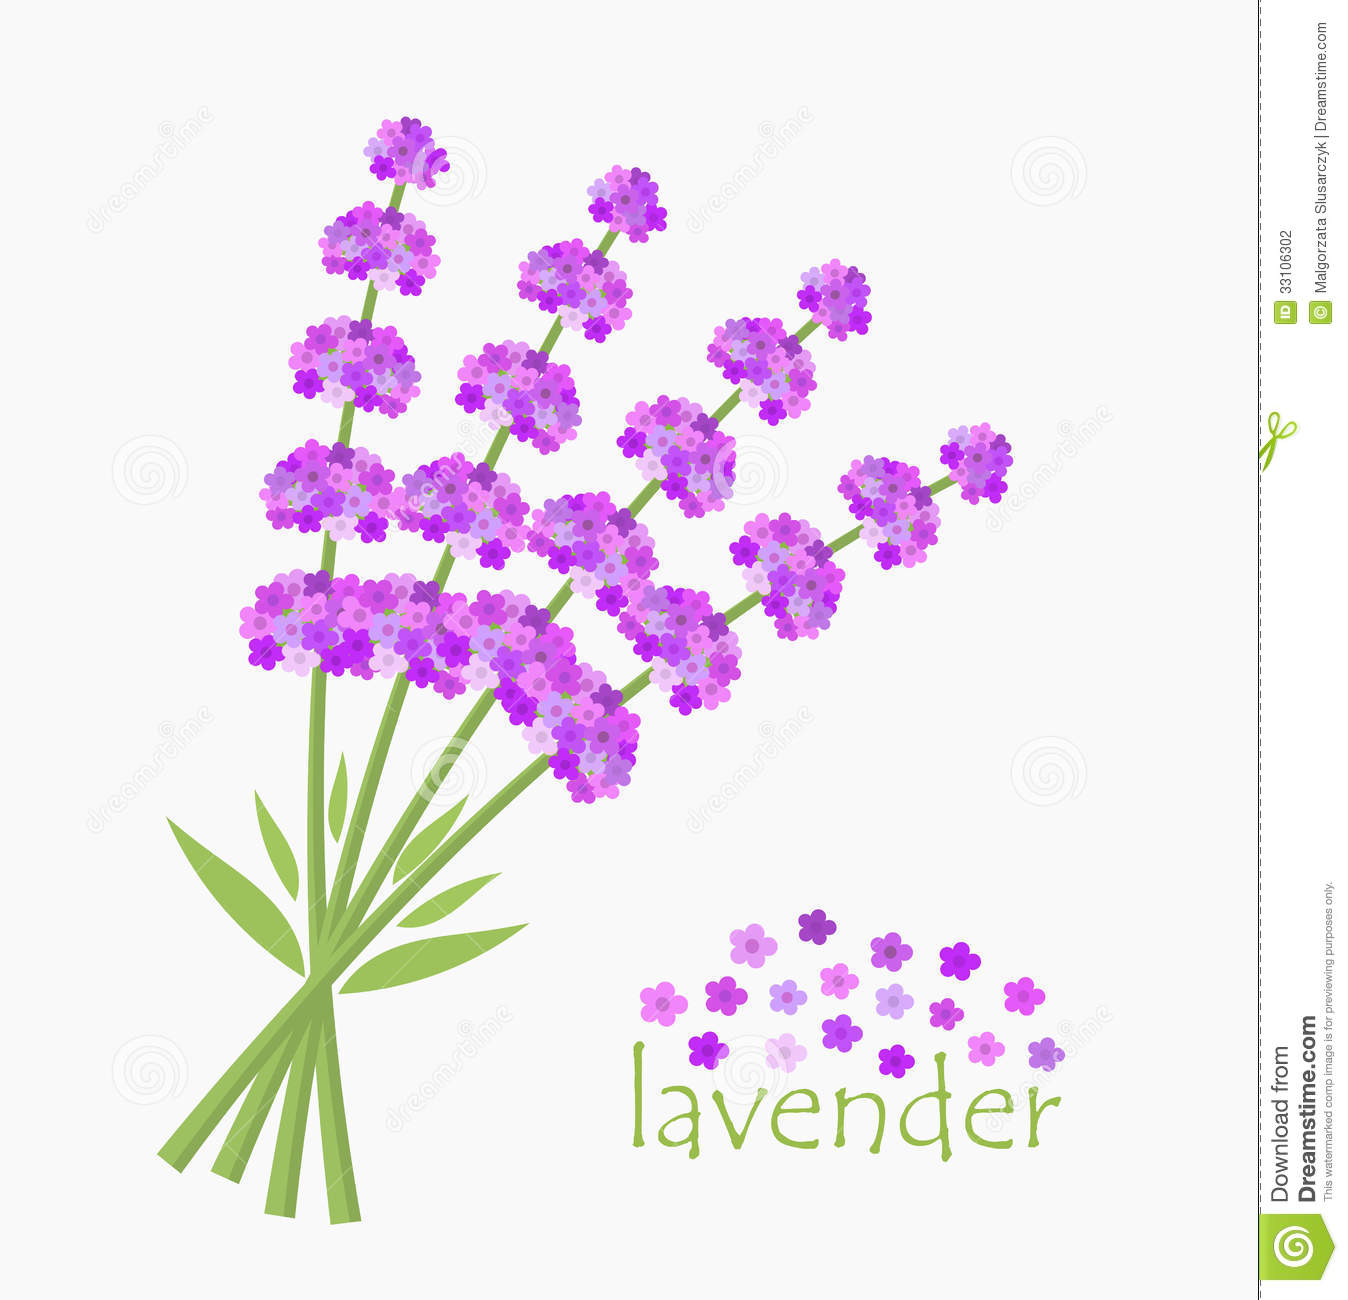  lavendar abstract vector. Lavender clipart simple